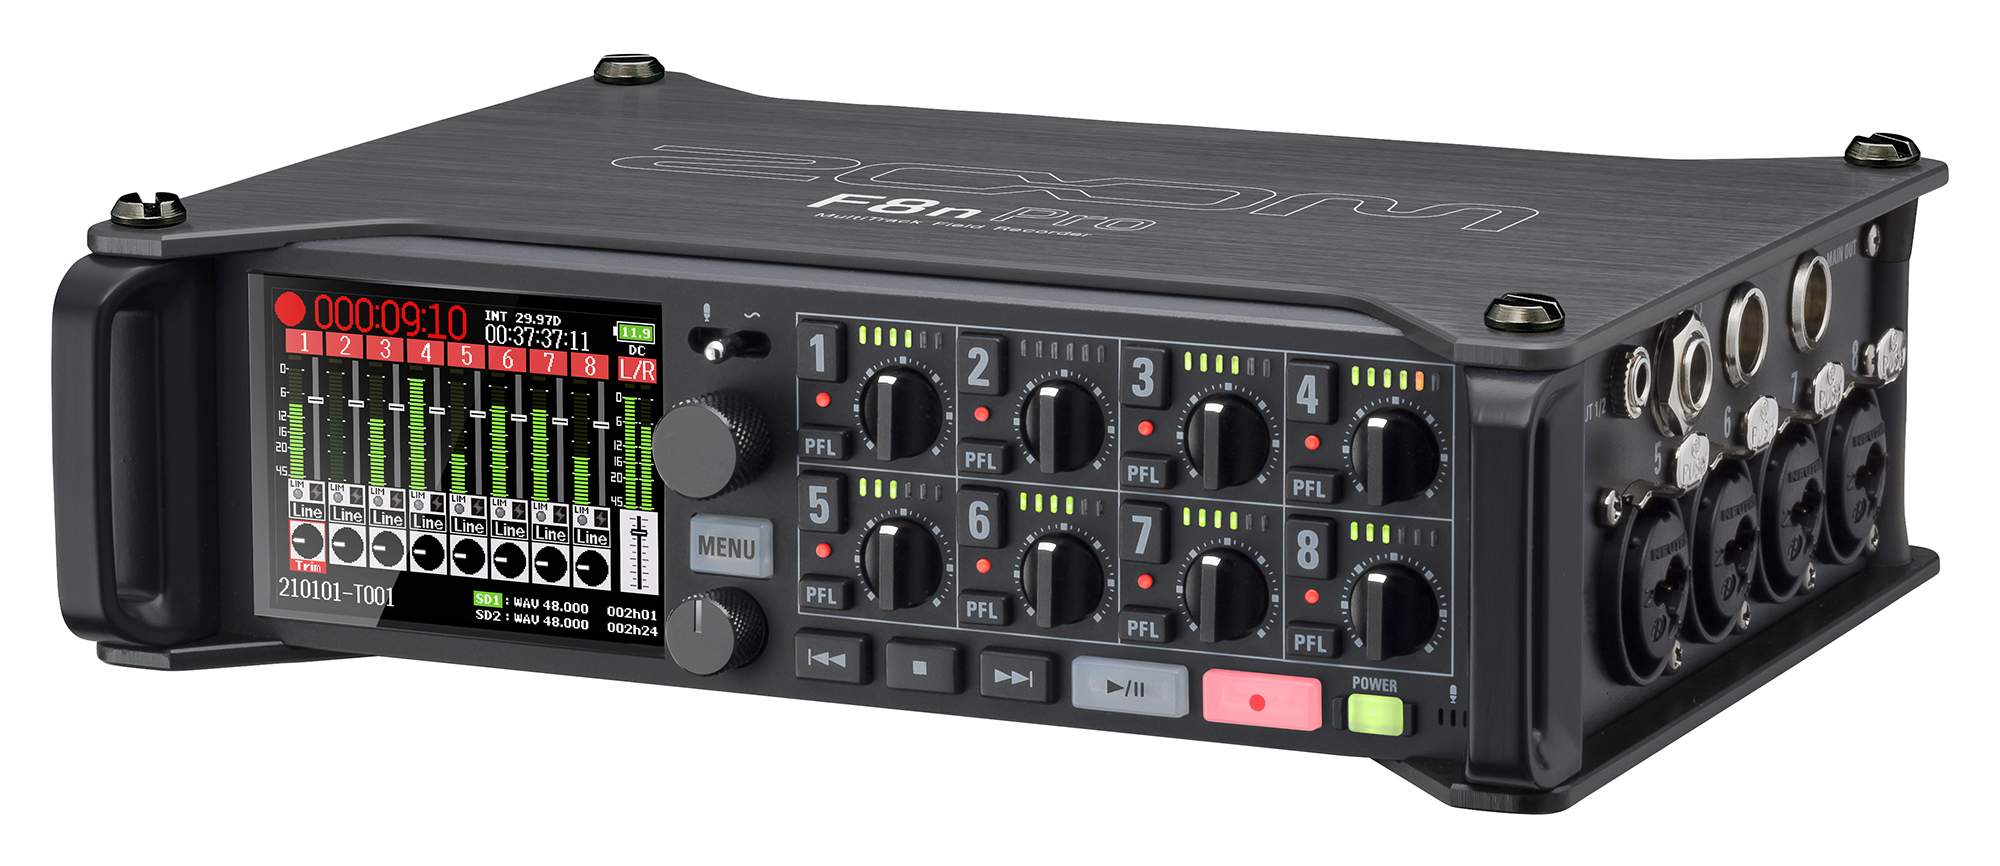 Zoom F8n Pro - Multi tracks recorder - Variation 2